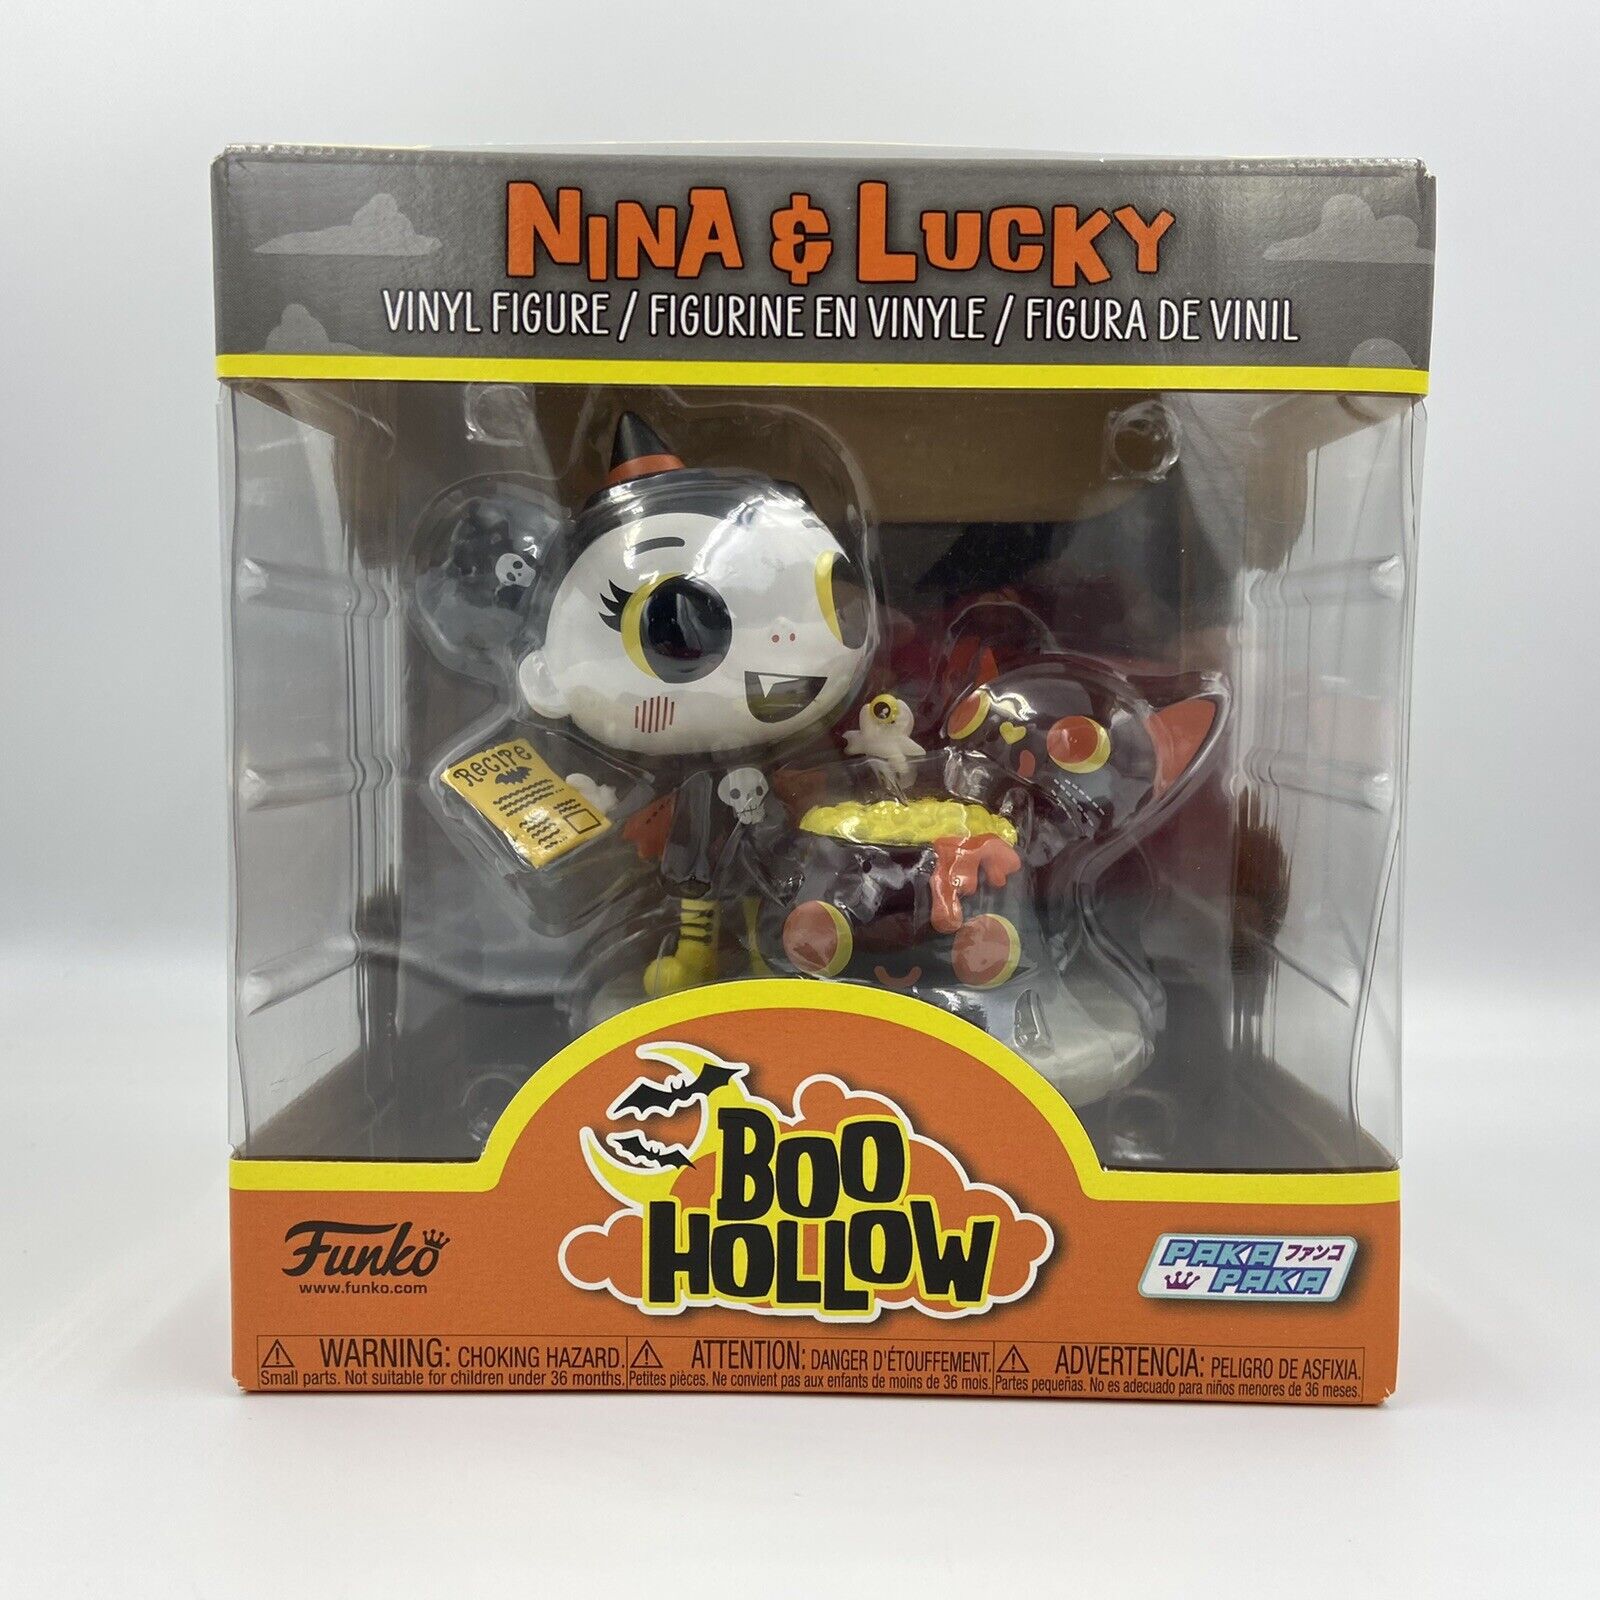 Funko - Paka Paka - Boo Hollow Nina & Lucky Deluxe Vinyl Figure - Brand New